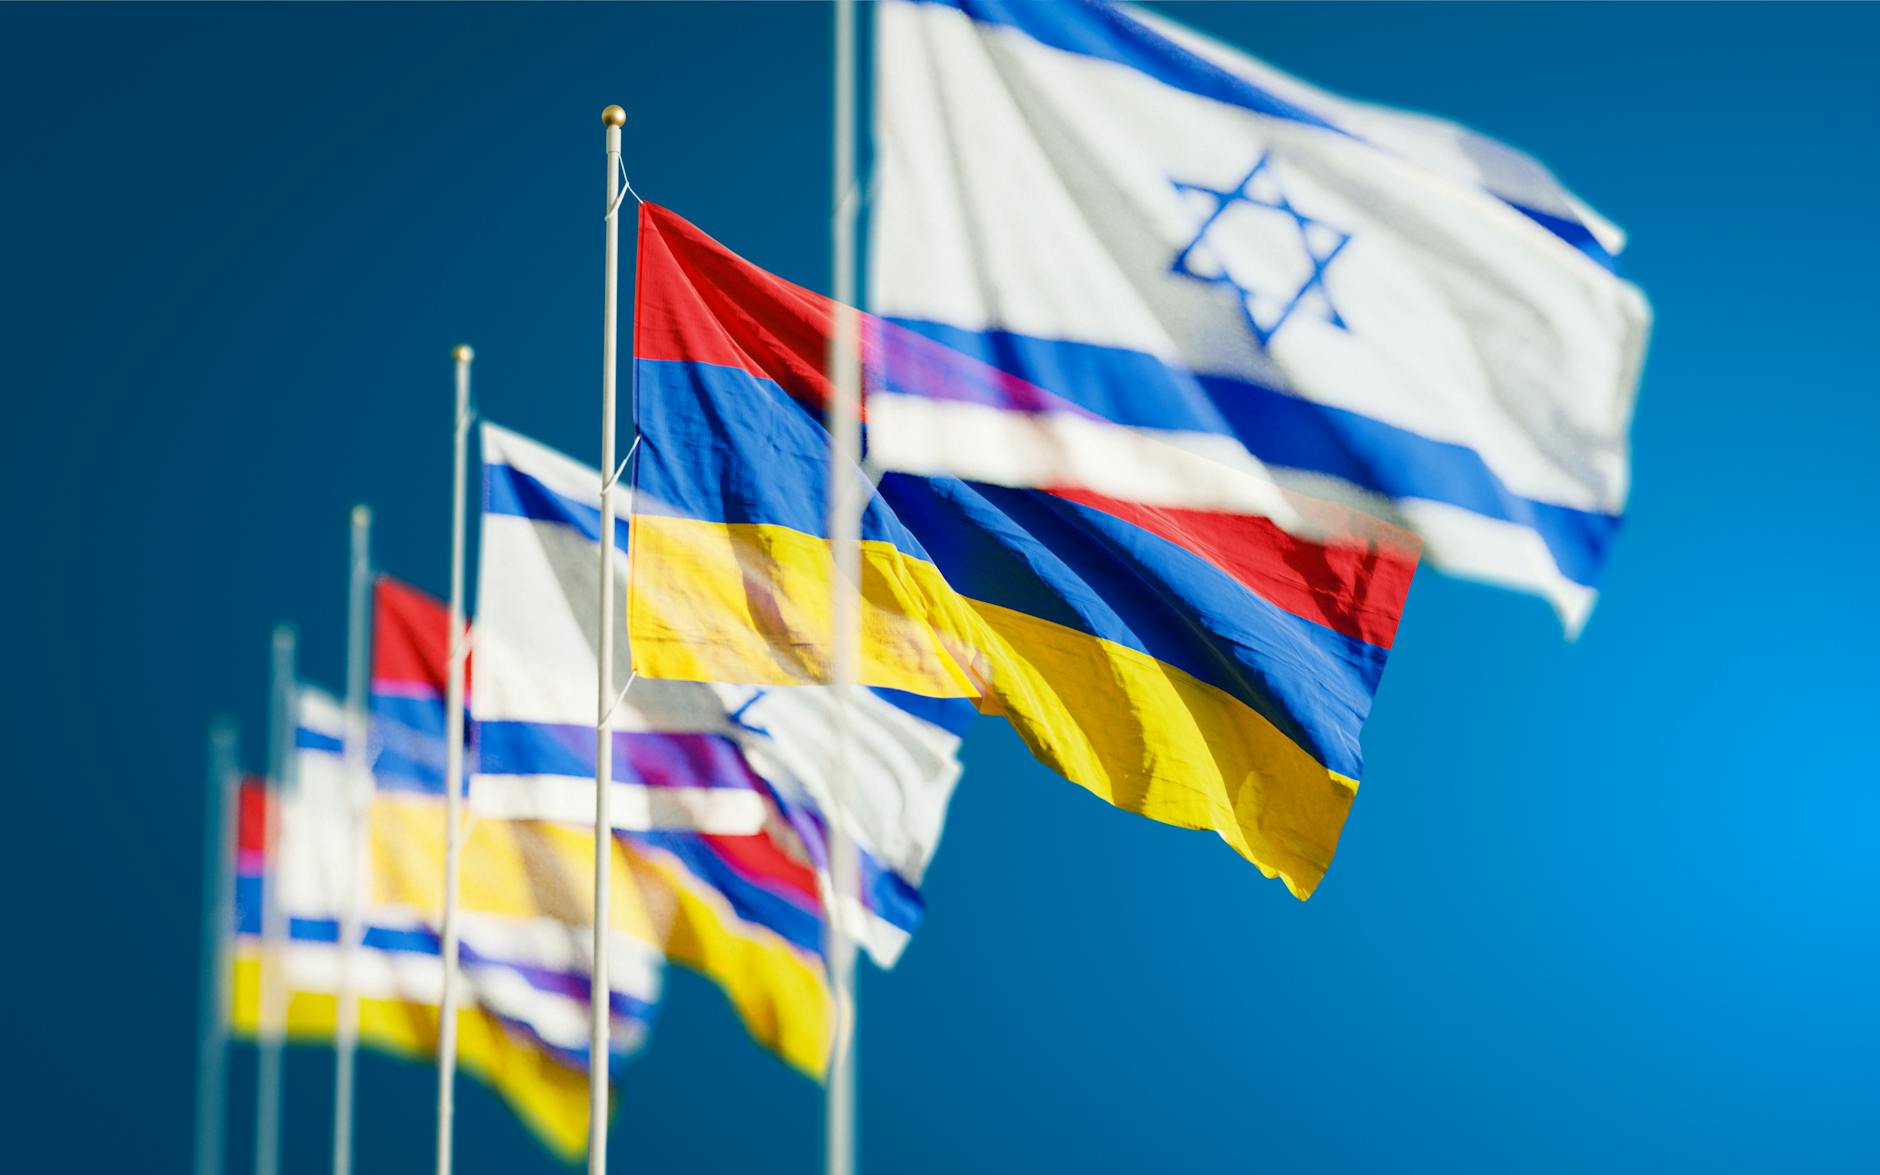 armenia and israel flags against blue sky